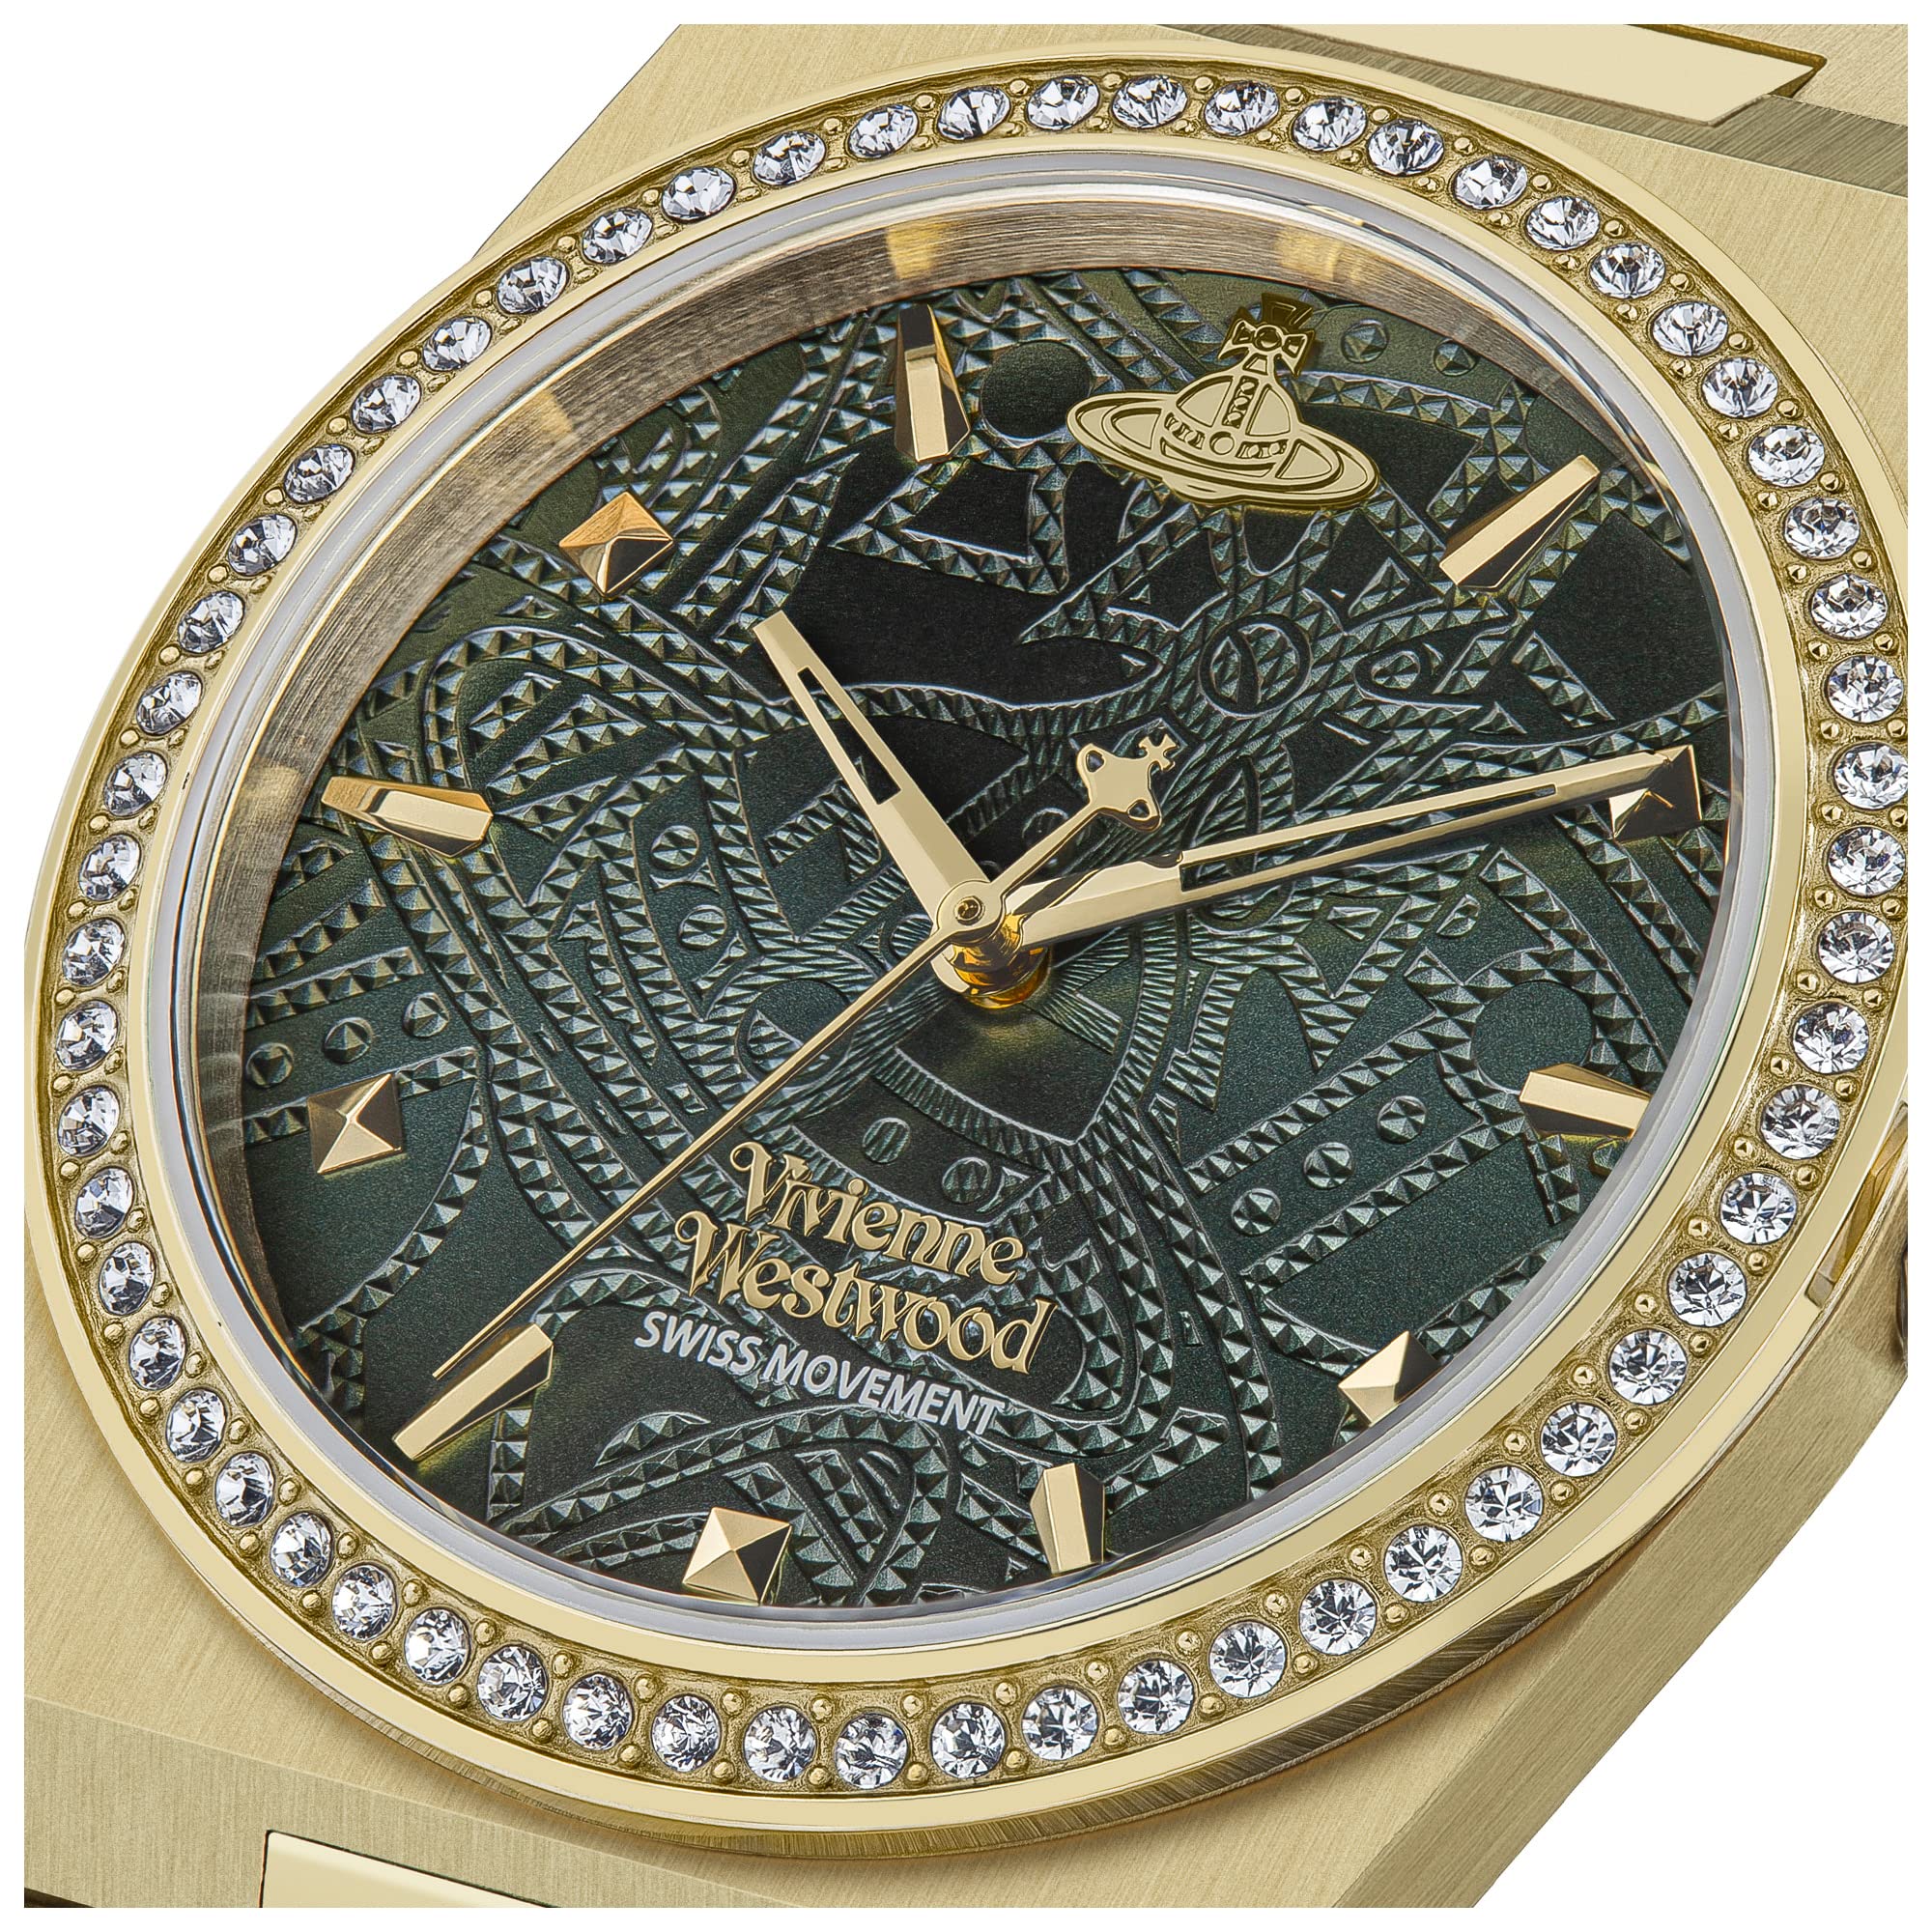 Vivienne Westwood Charterhouse Ladies Quartz Watch with Stainless Steel Bracelet